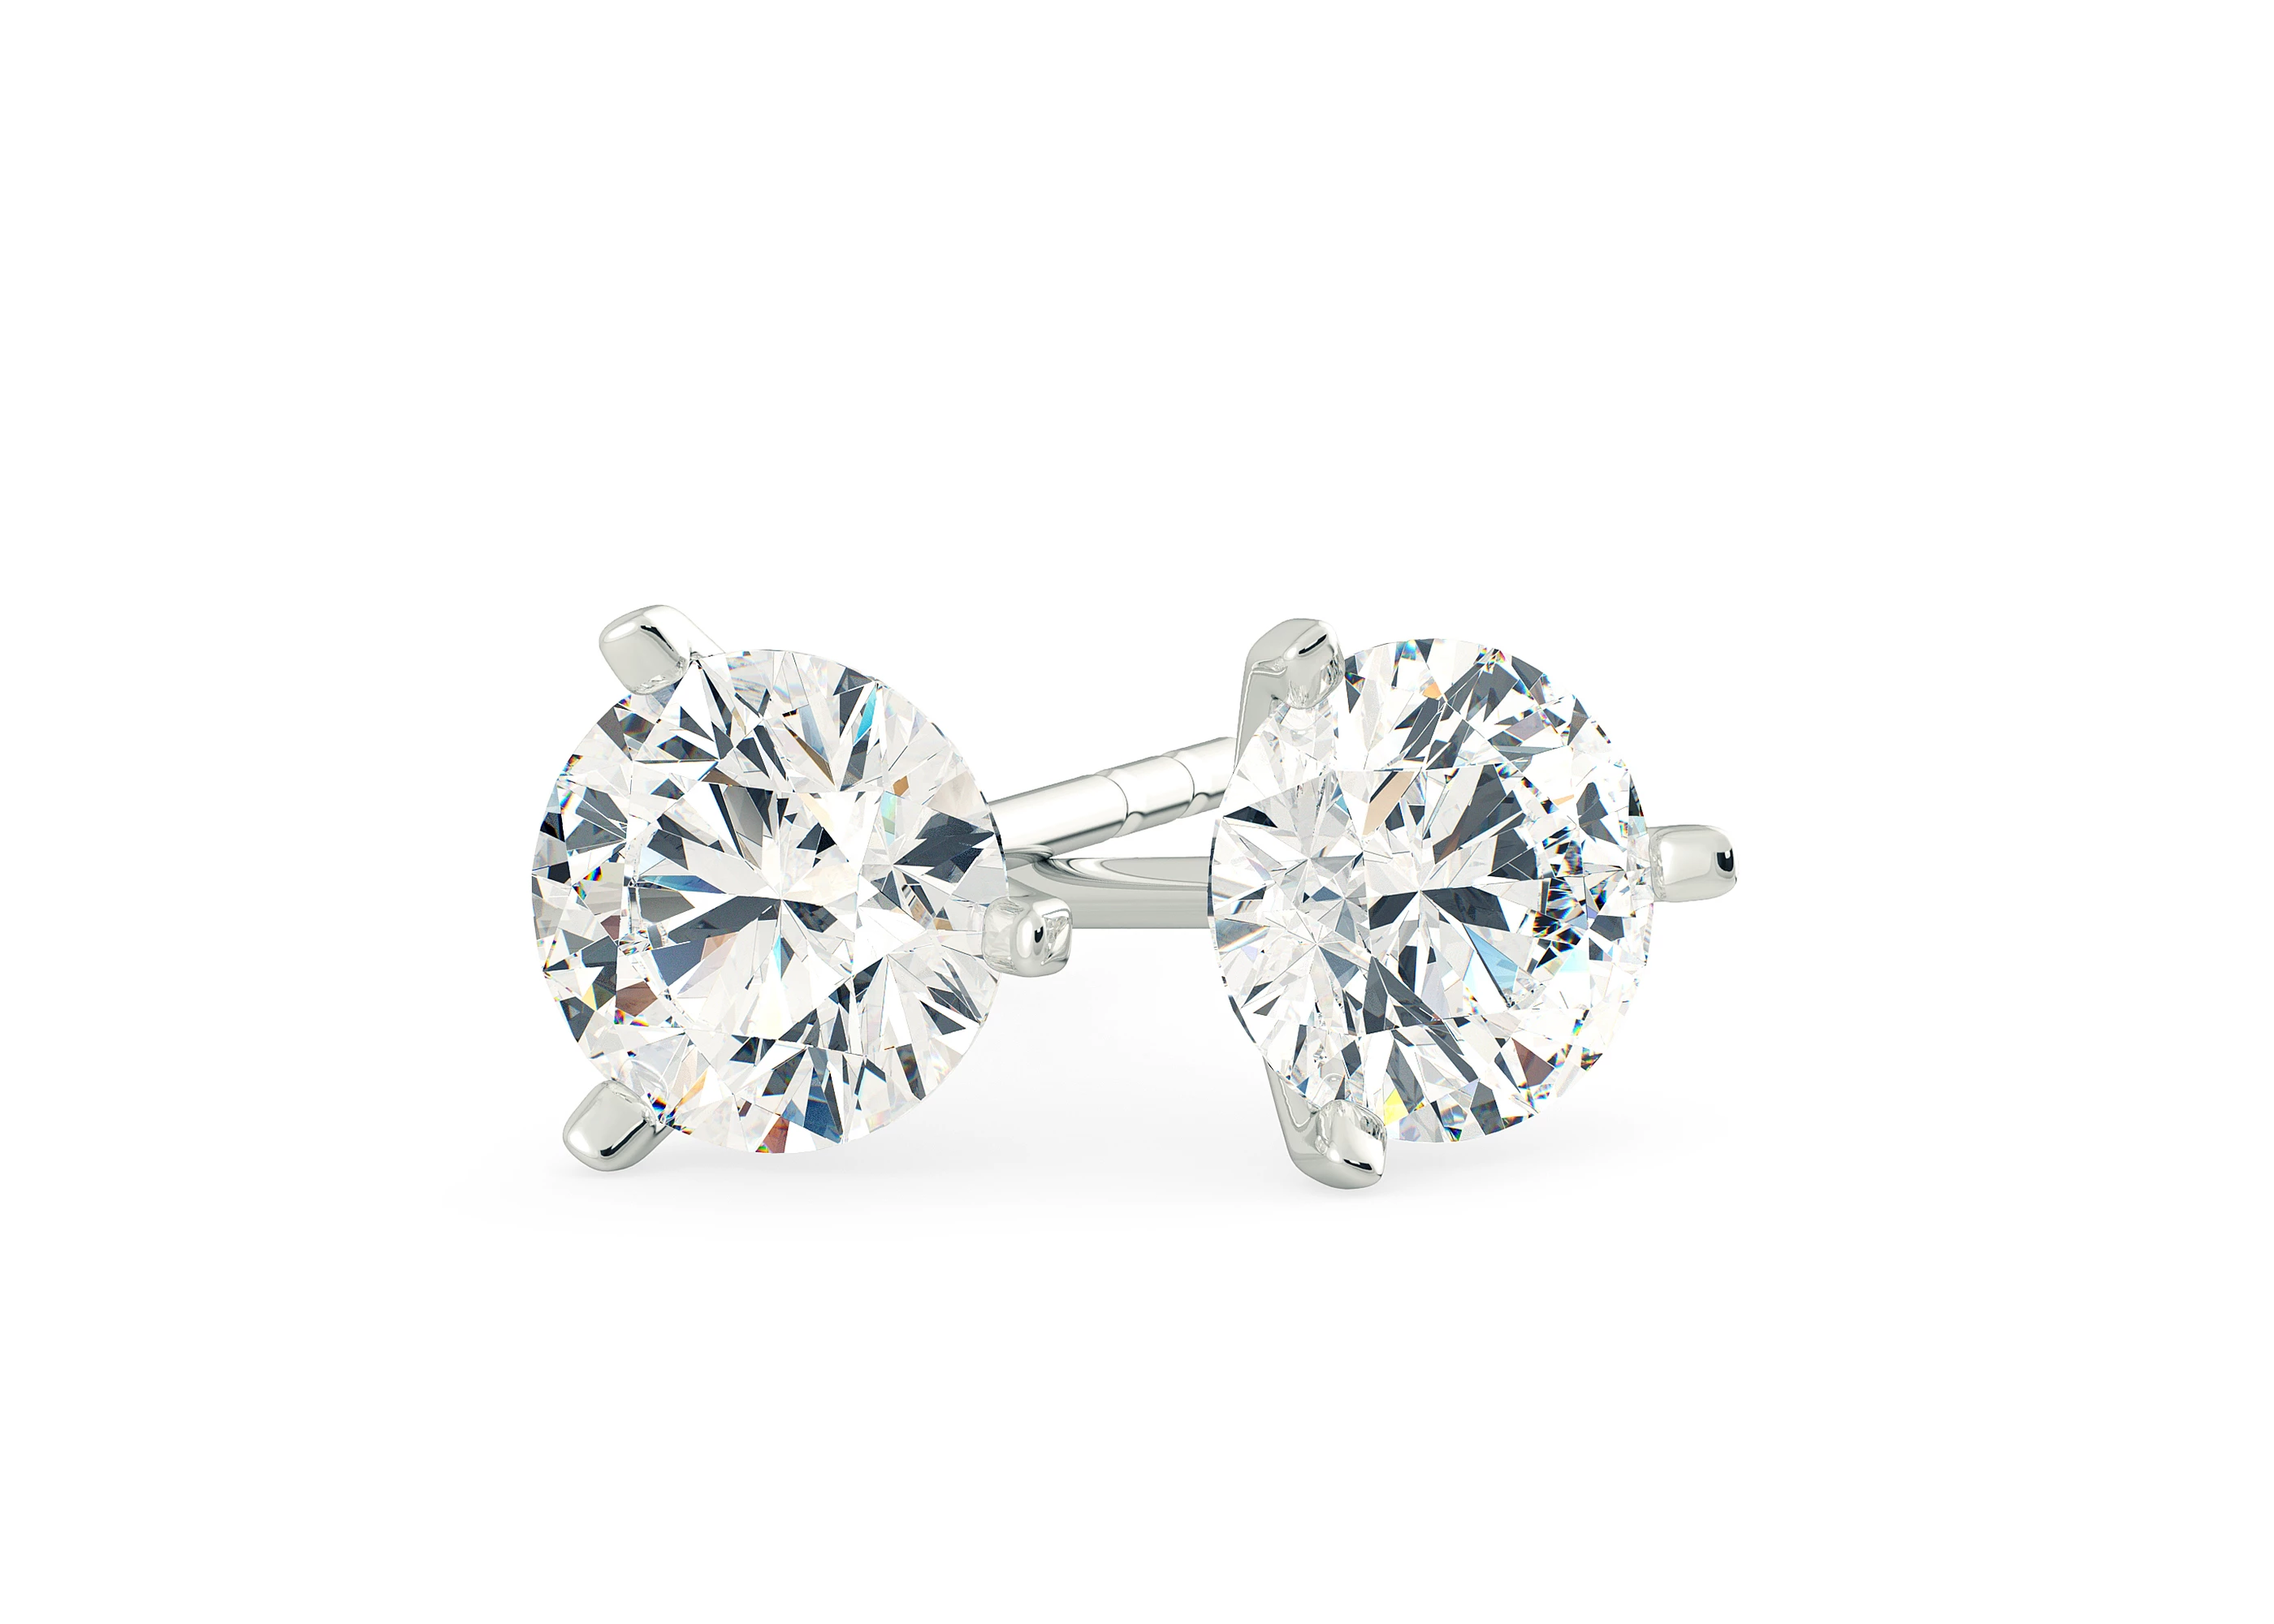 Alegra Round Brilliant Diamond Stud Earrings in 18K White Gold with Alpha Backs